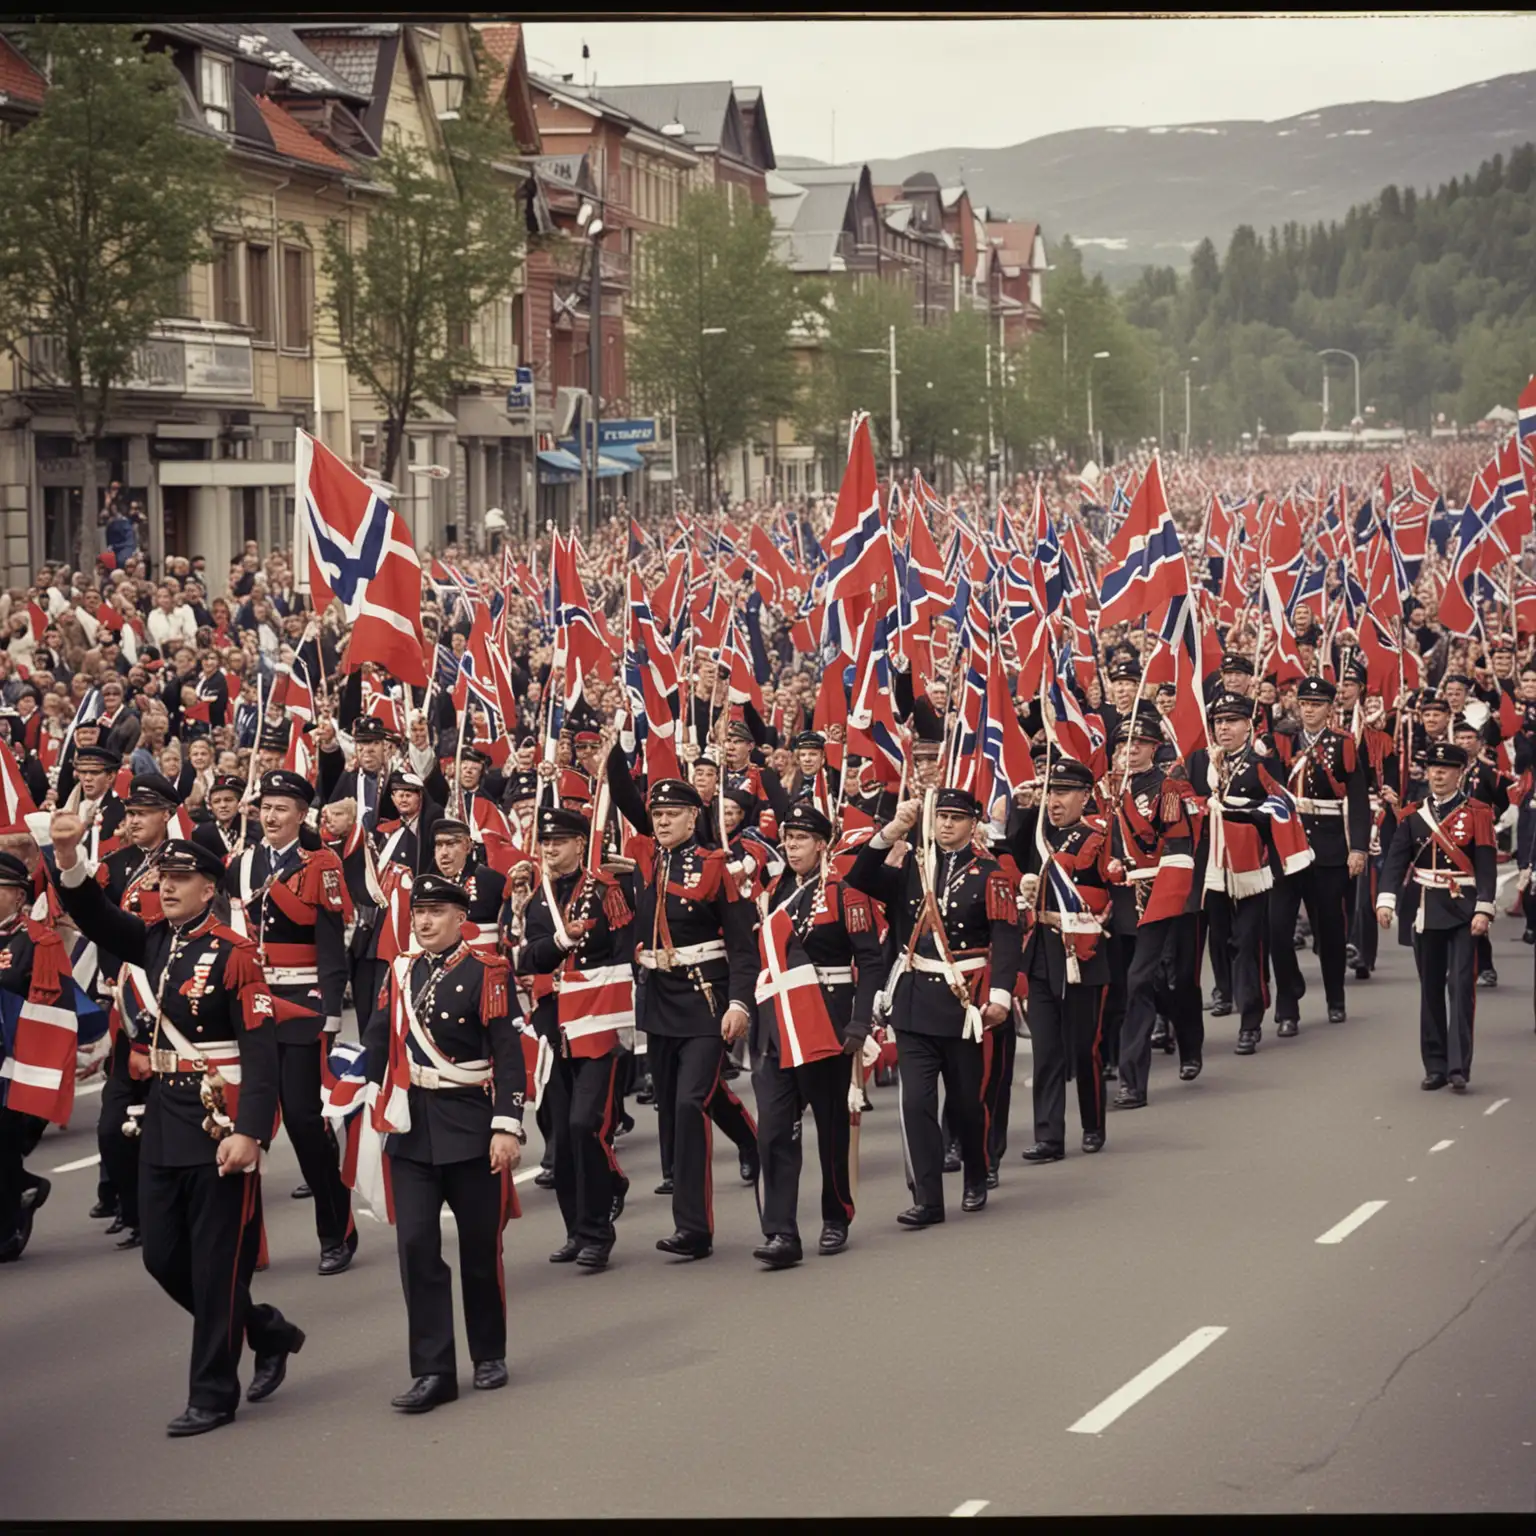 Norwegian 17th of may parade, peopla waving the norwegian flag, album cover